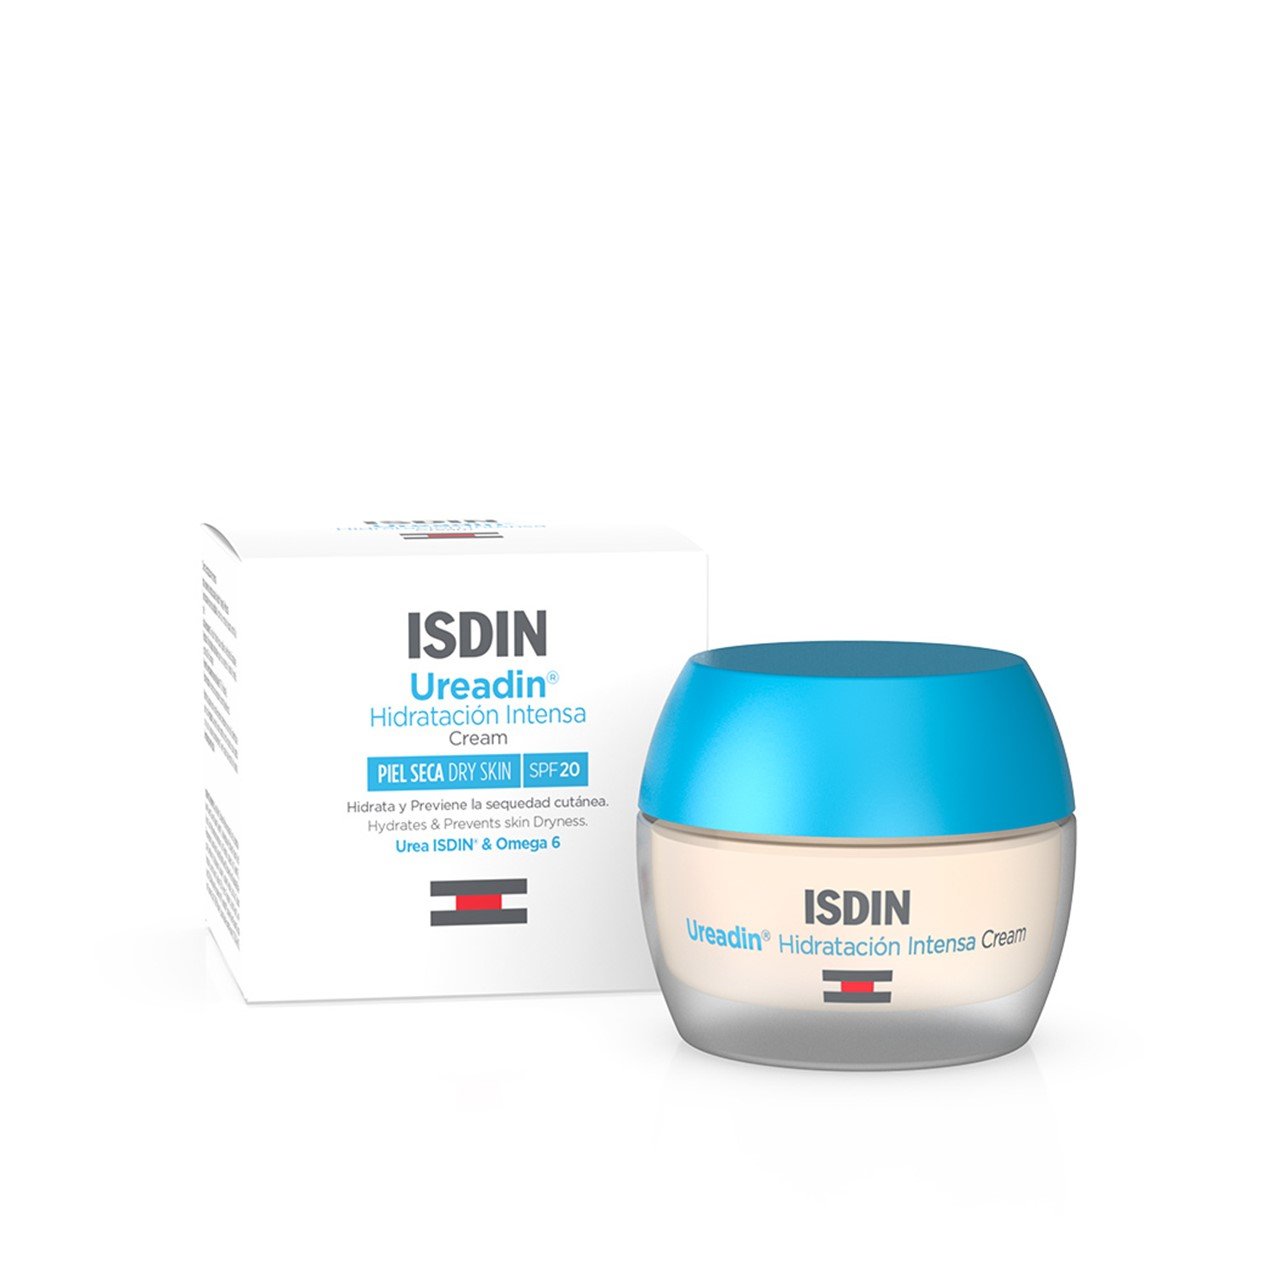 ISDIN Ureadin Intense Hydration Cream SPF20 50ml (1.69fl oz)